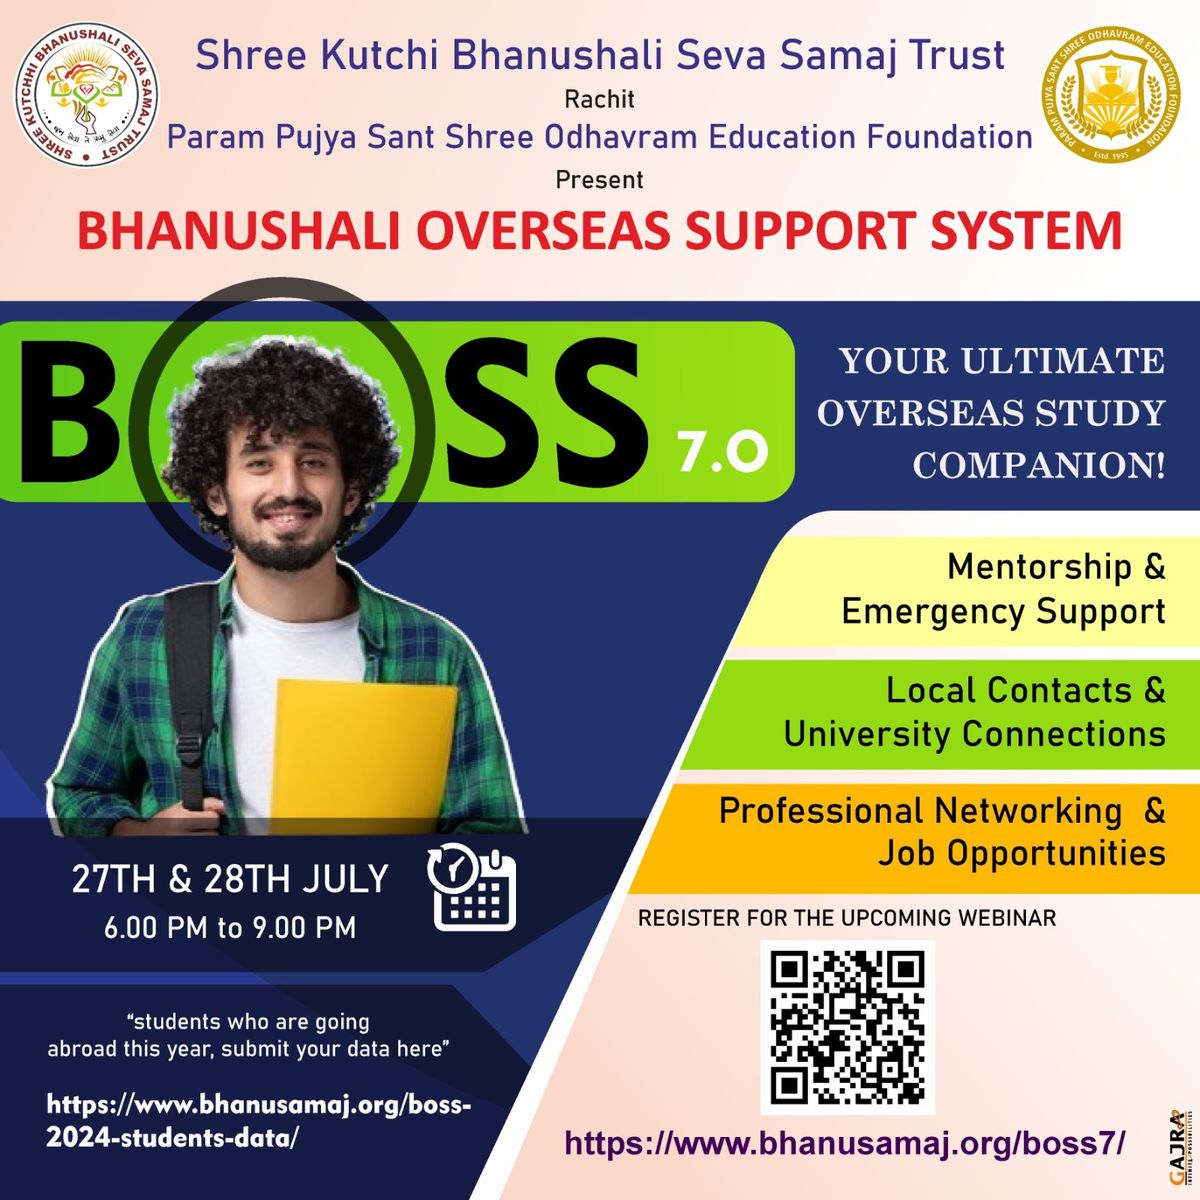 BOSS 7.0 - Bhanushali Overseas Support System